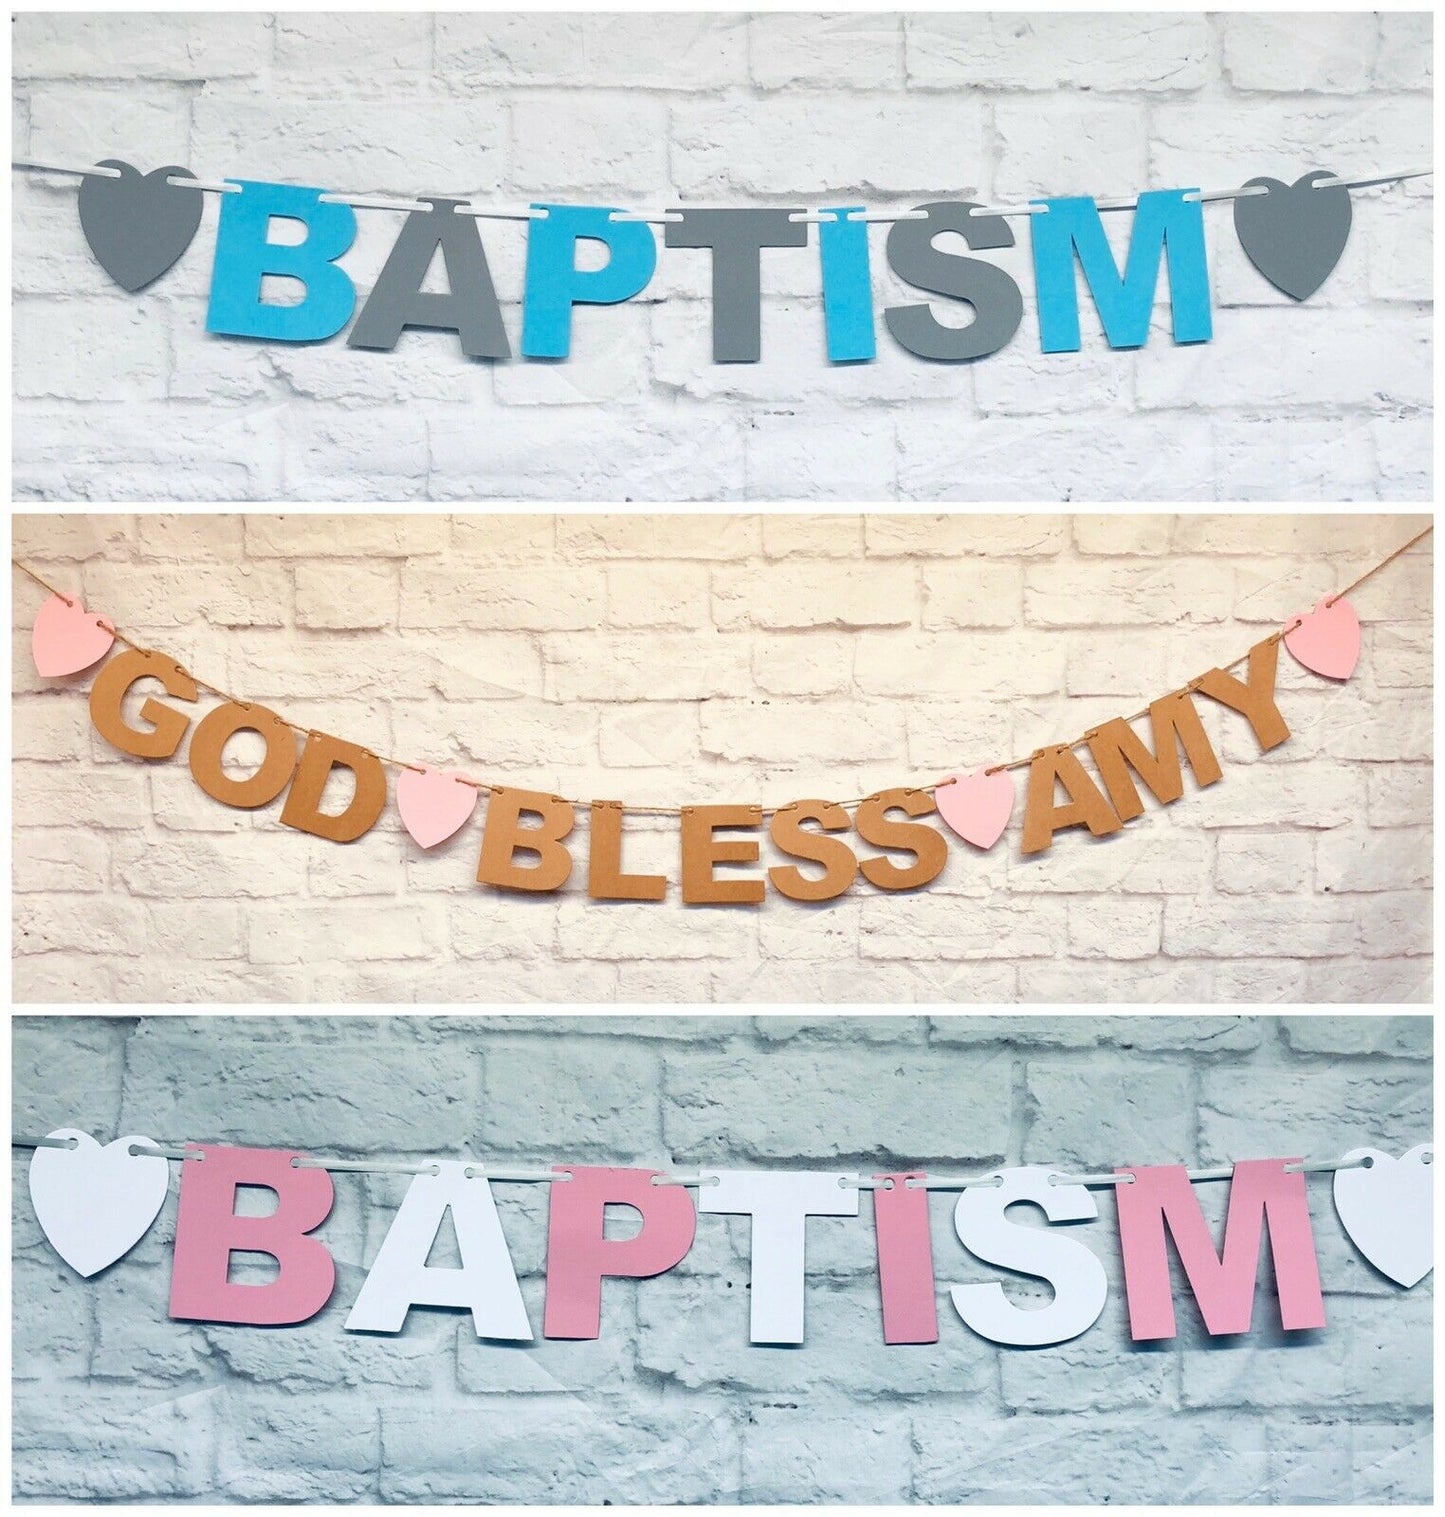 Baptism Christening Confirmation Naming Day Bunting,Banner